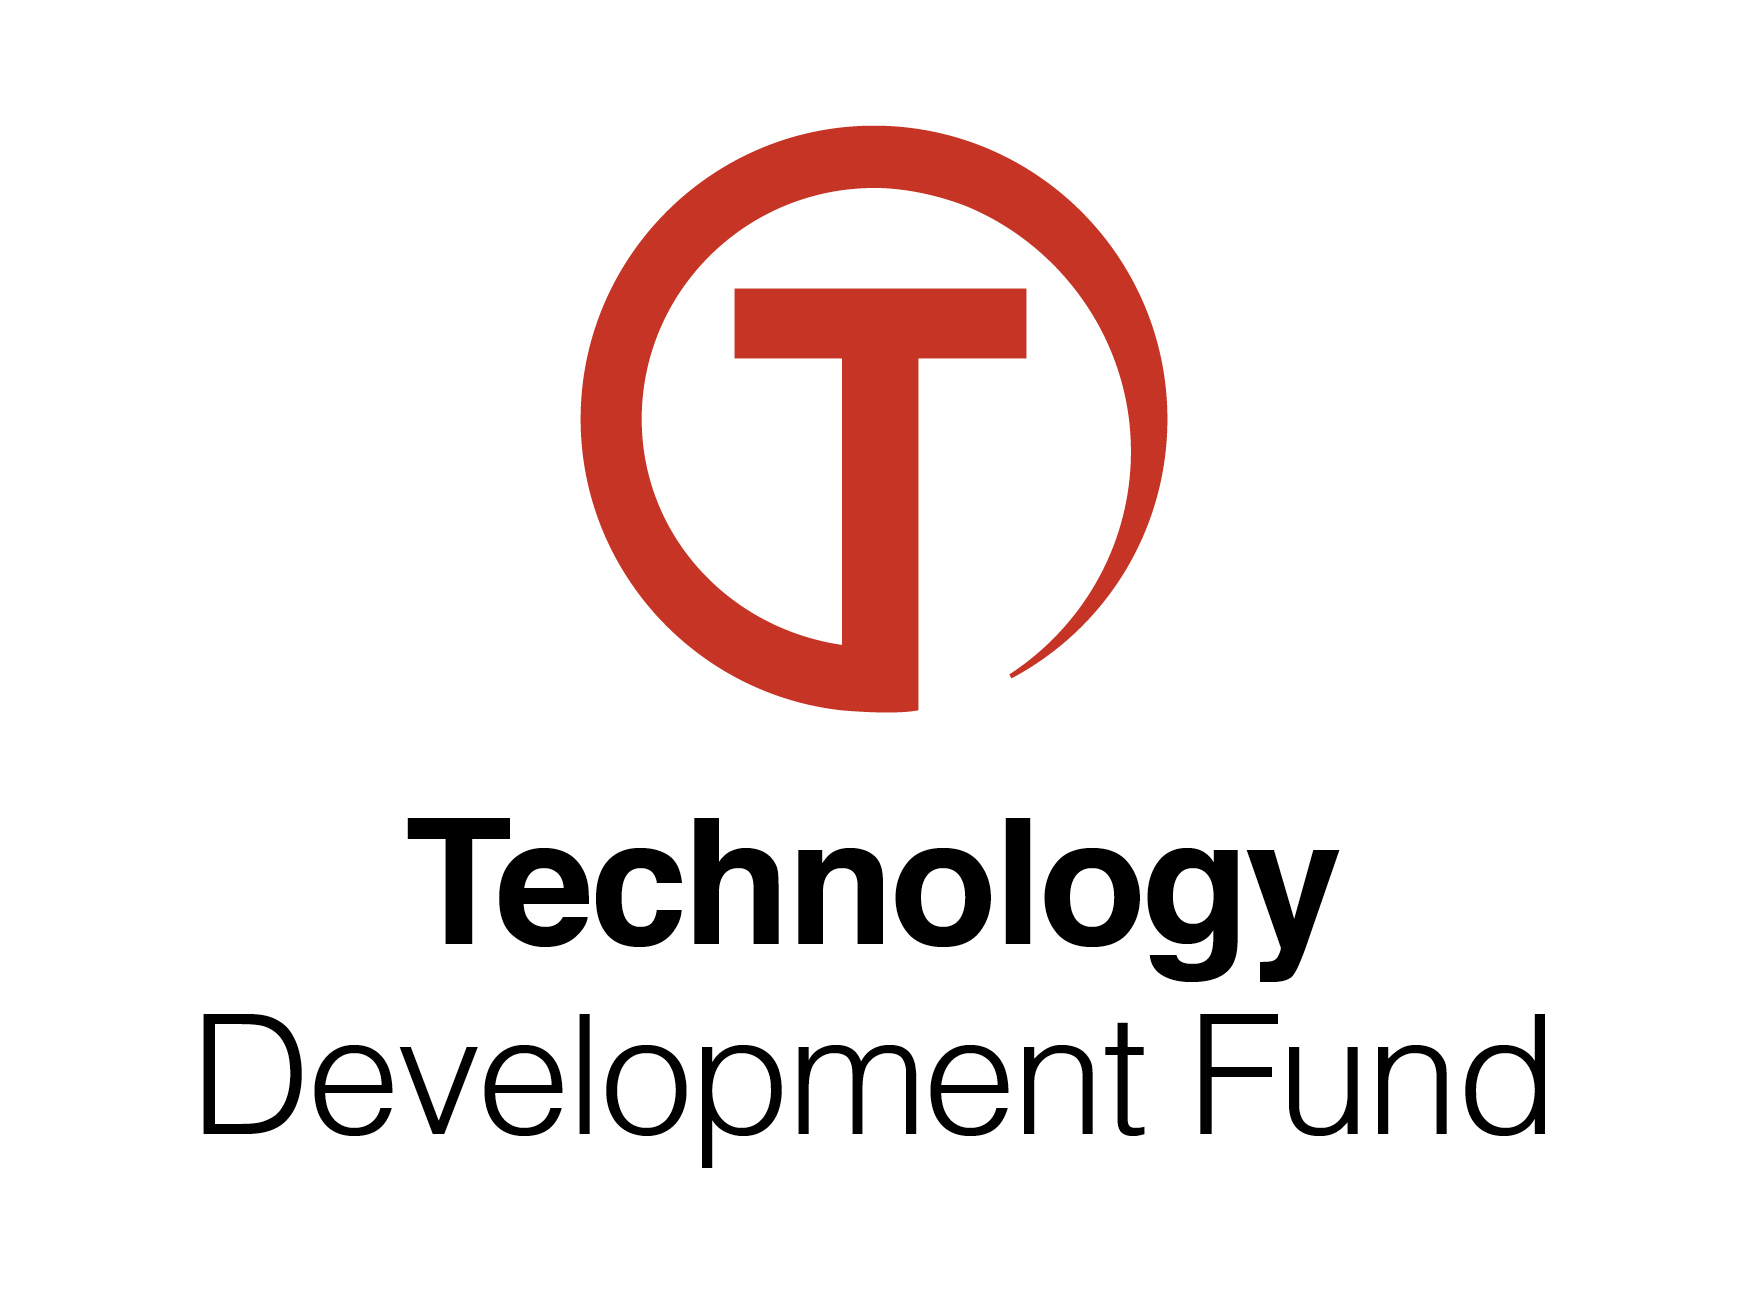 Technology Development Fund logo